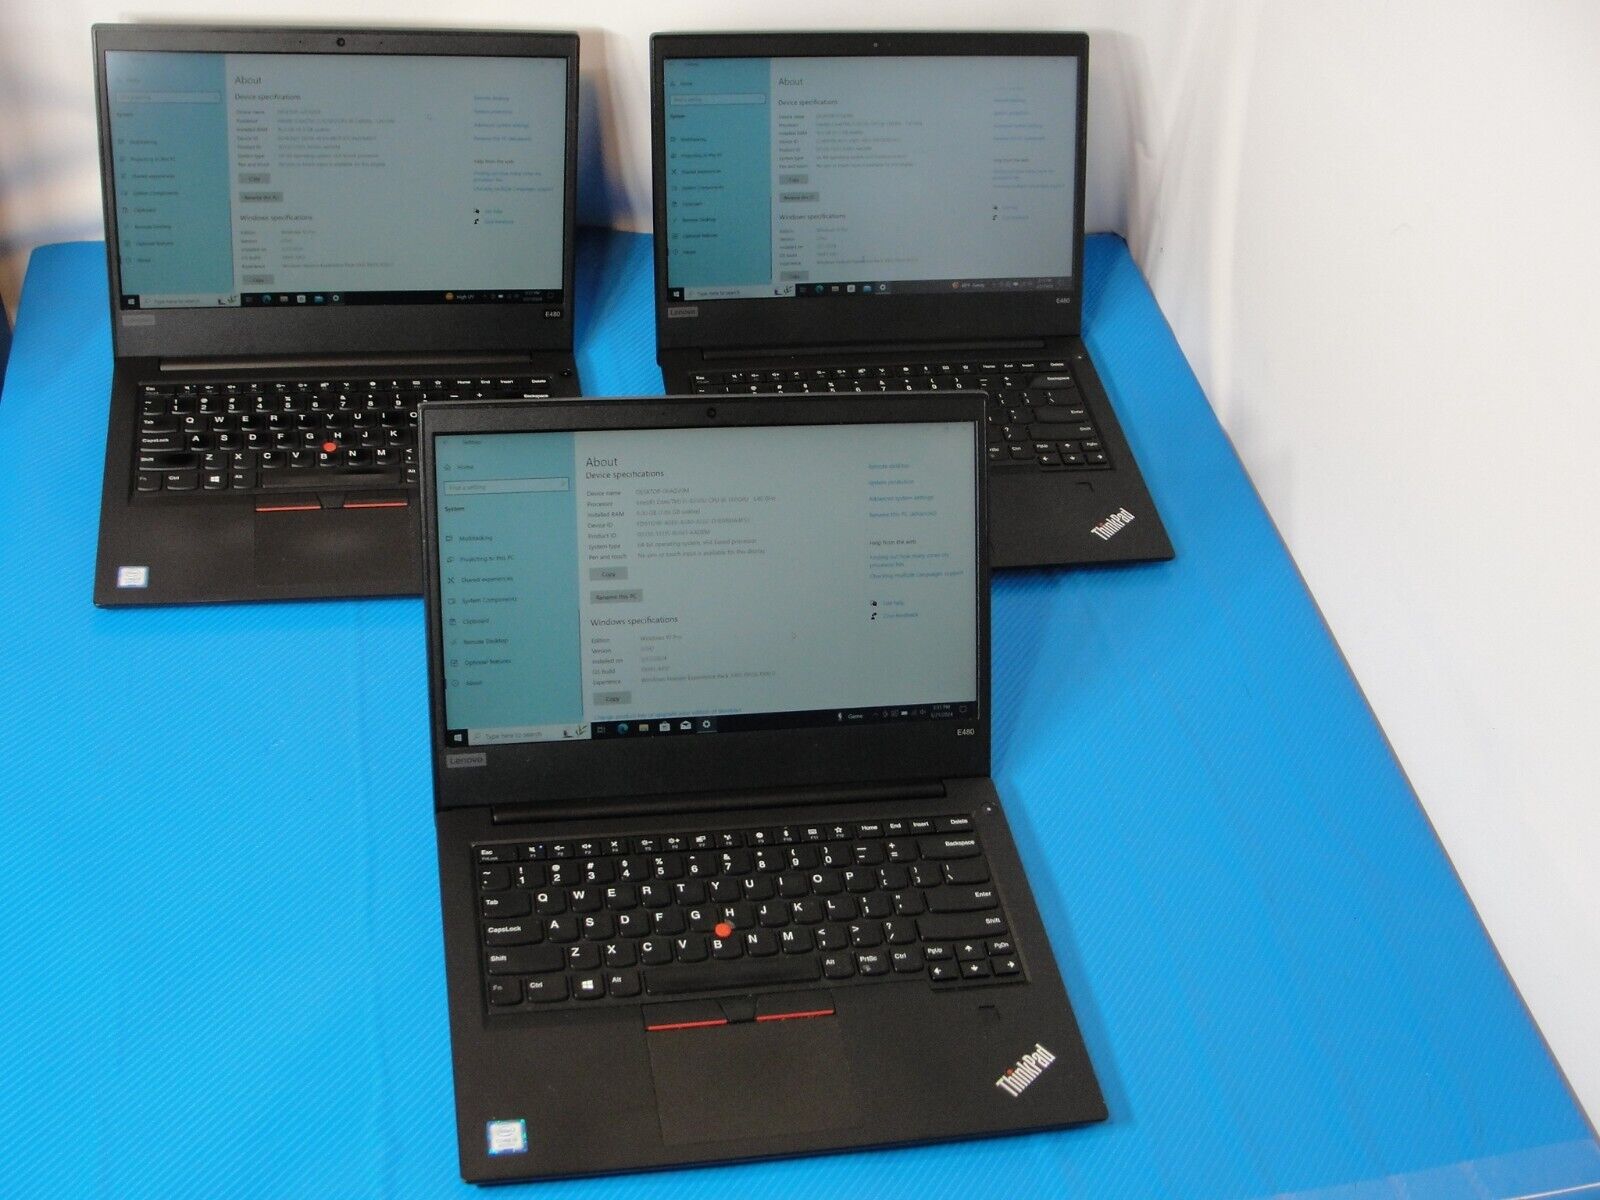 LOT 3 Lenovo E480 ThinkPad FHD 256GB SSD i5-8250U 16/8GB 1920x1080 Great Battery